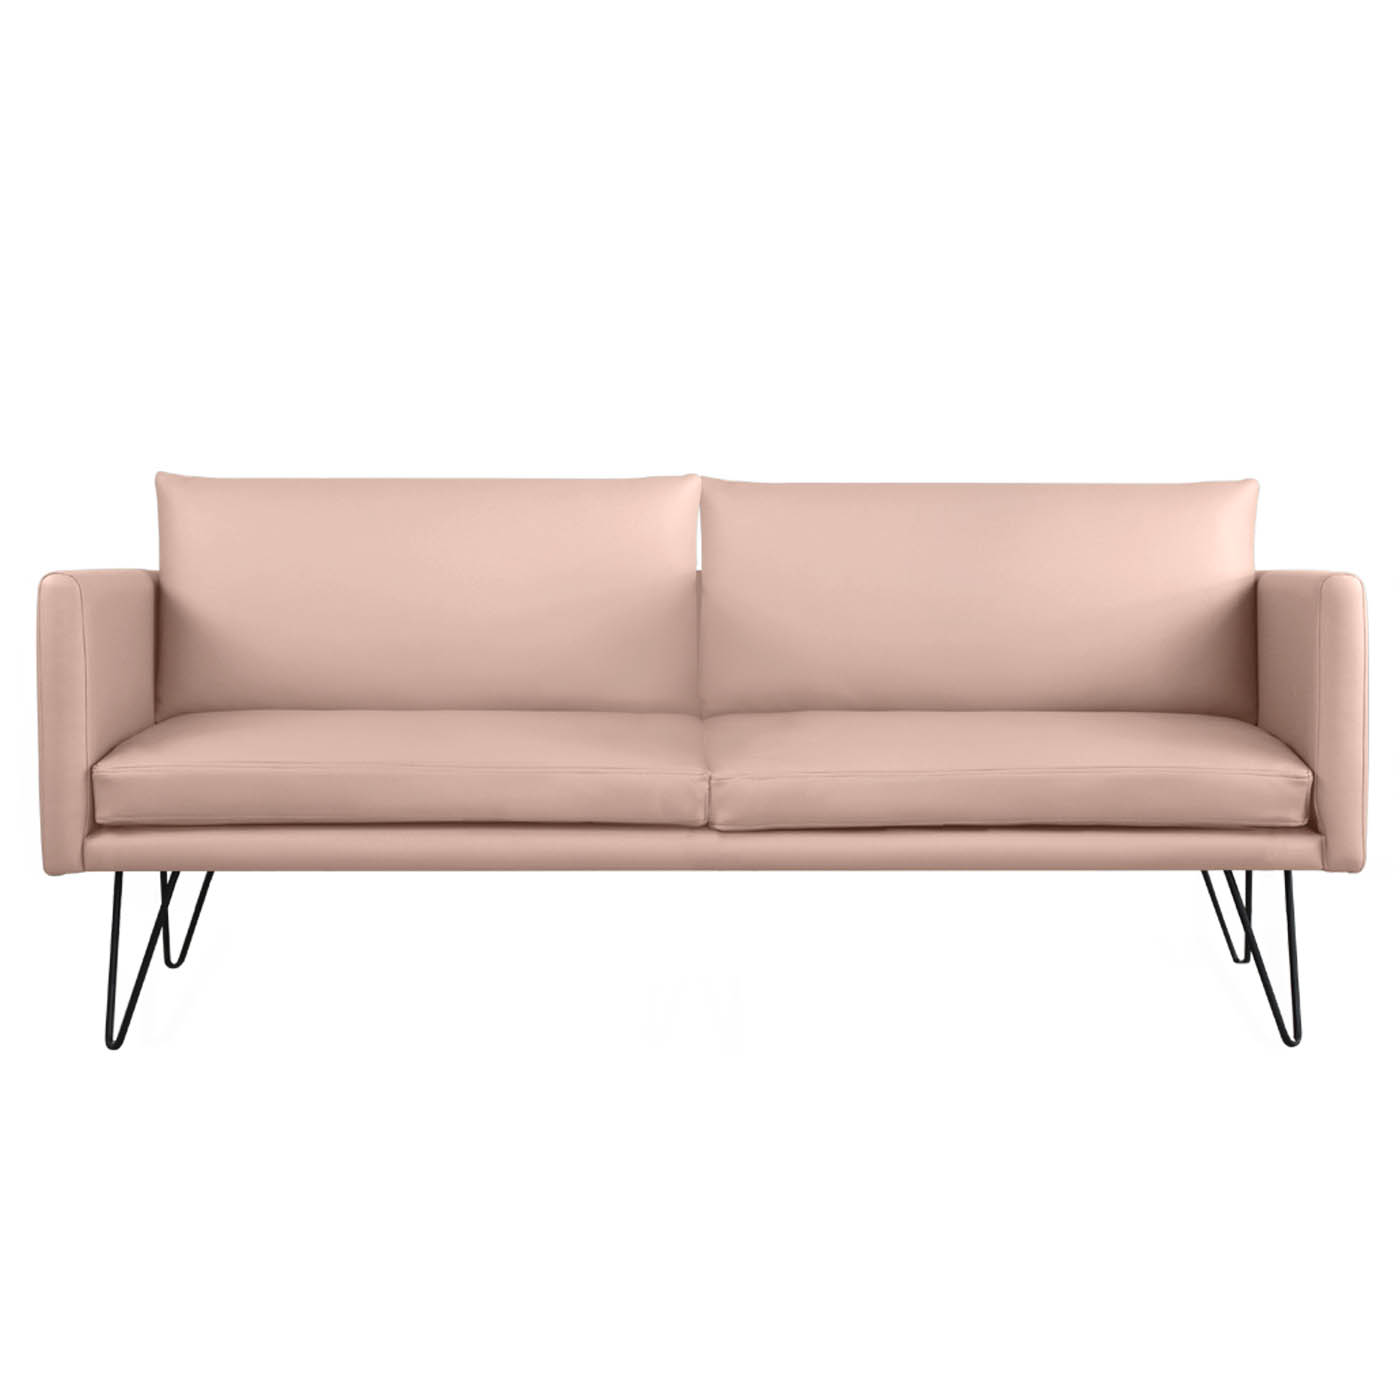 Noblitt Pale Pink Double Sofa